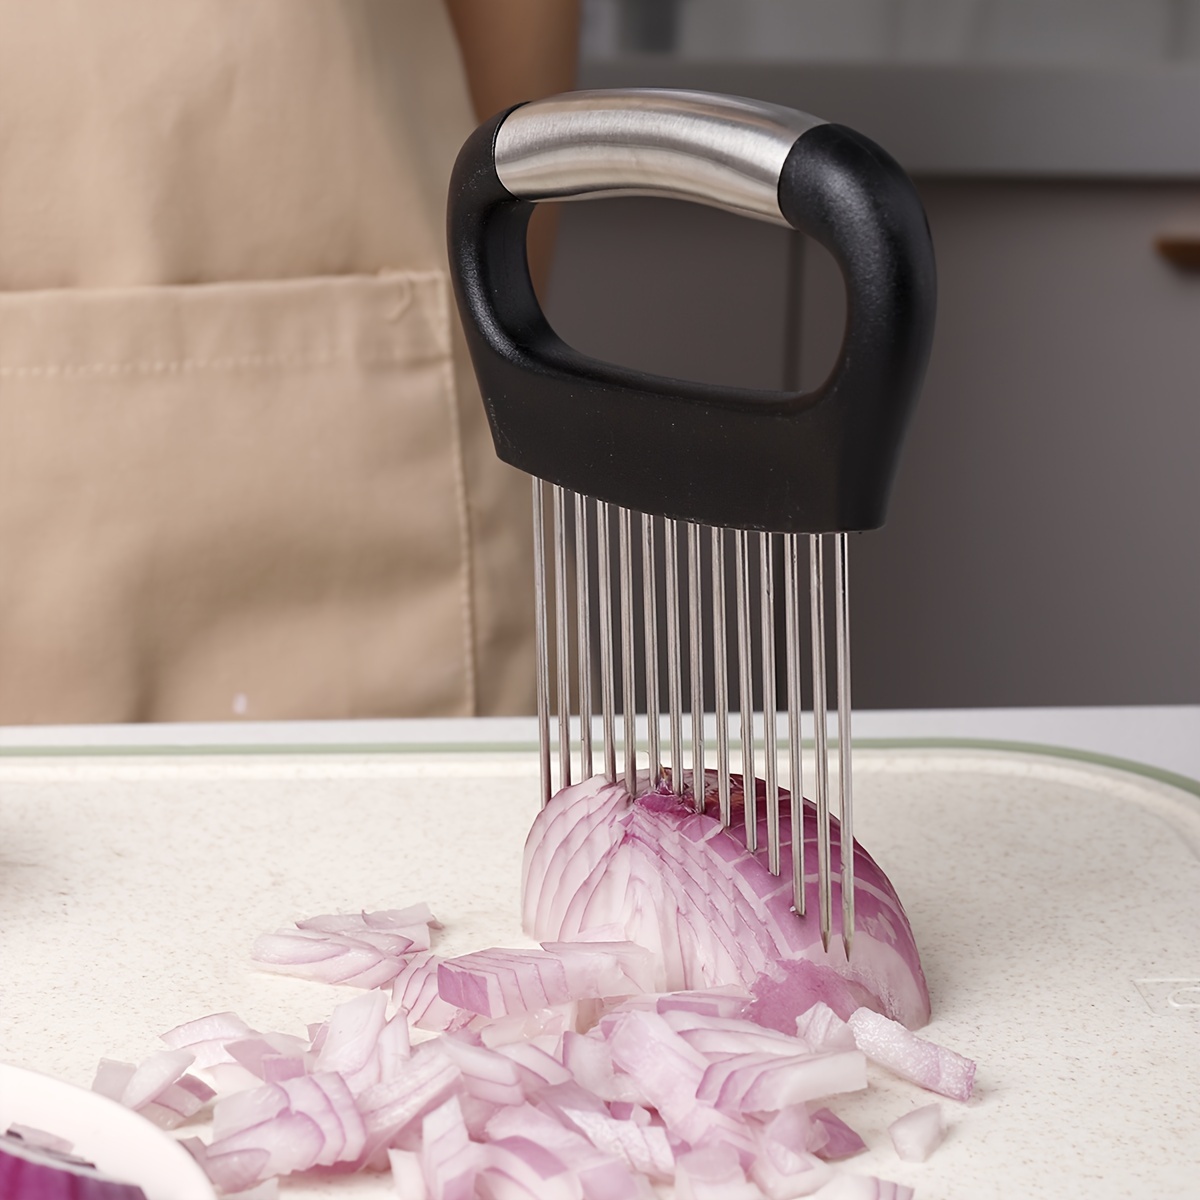 Creative Kitchen Slice Cutting Tool